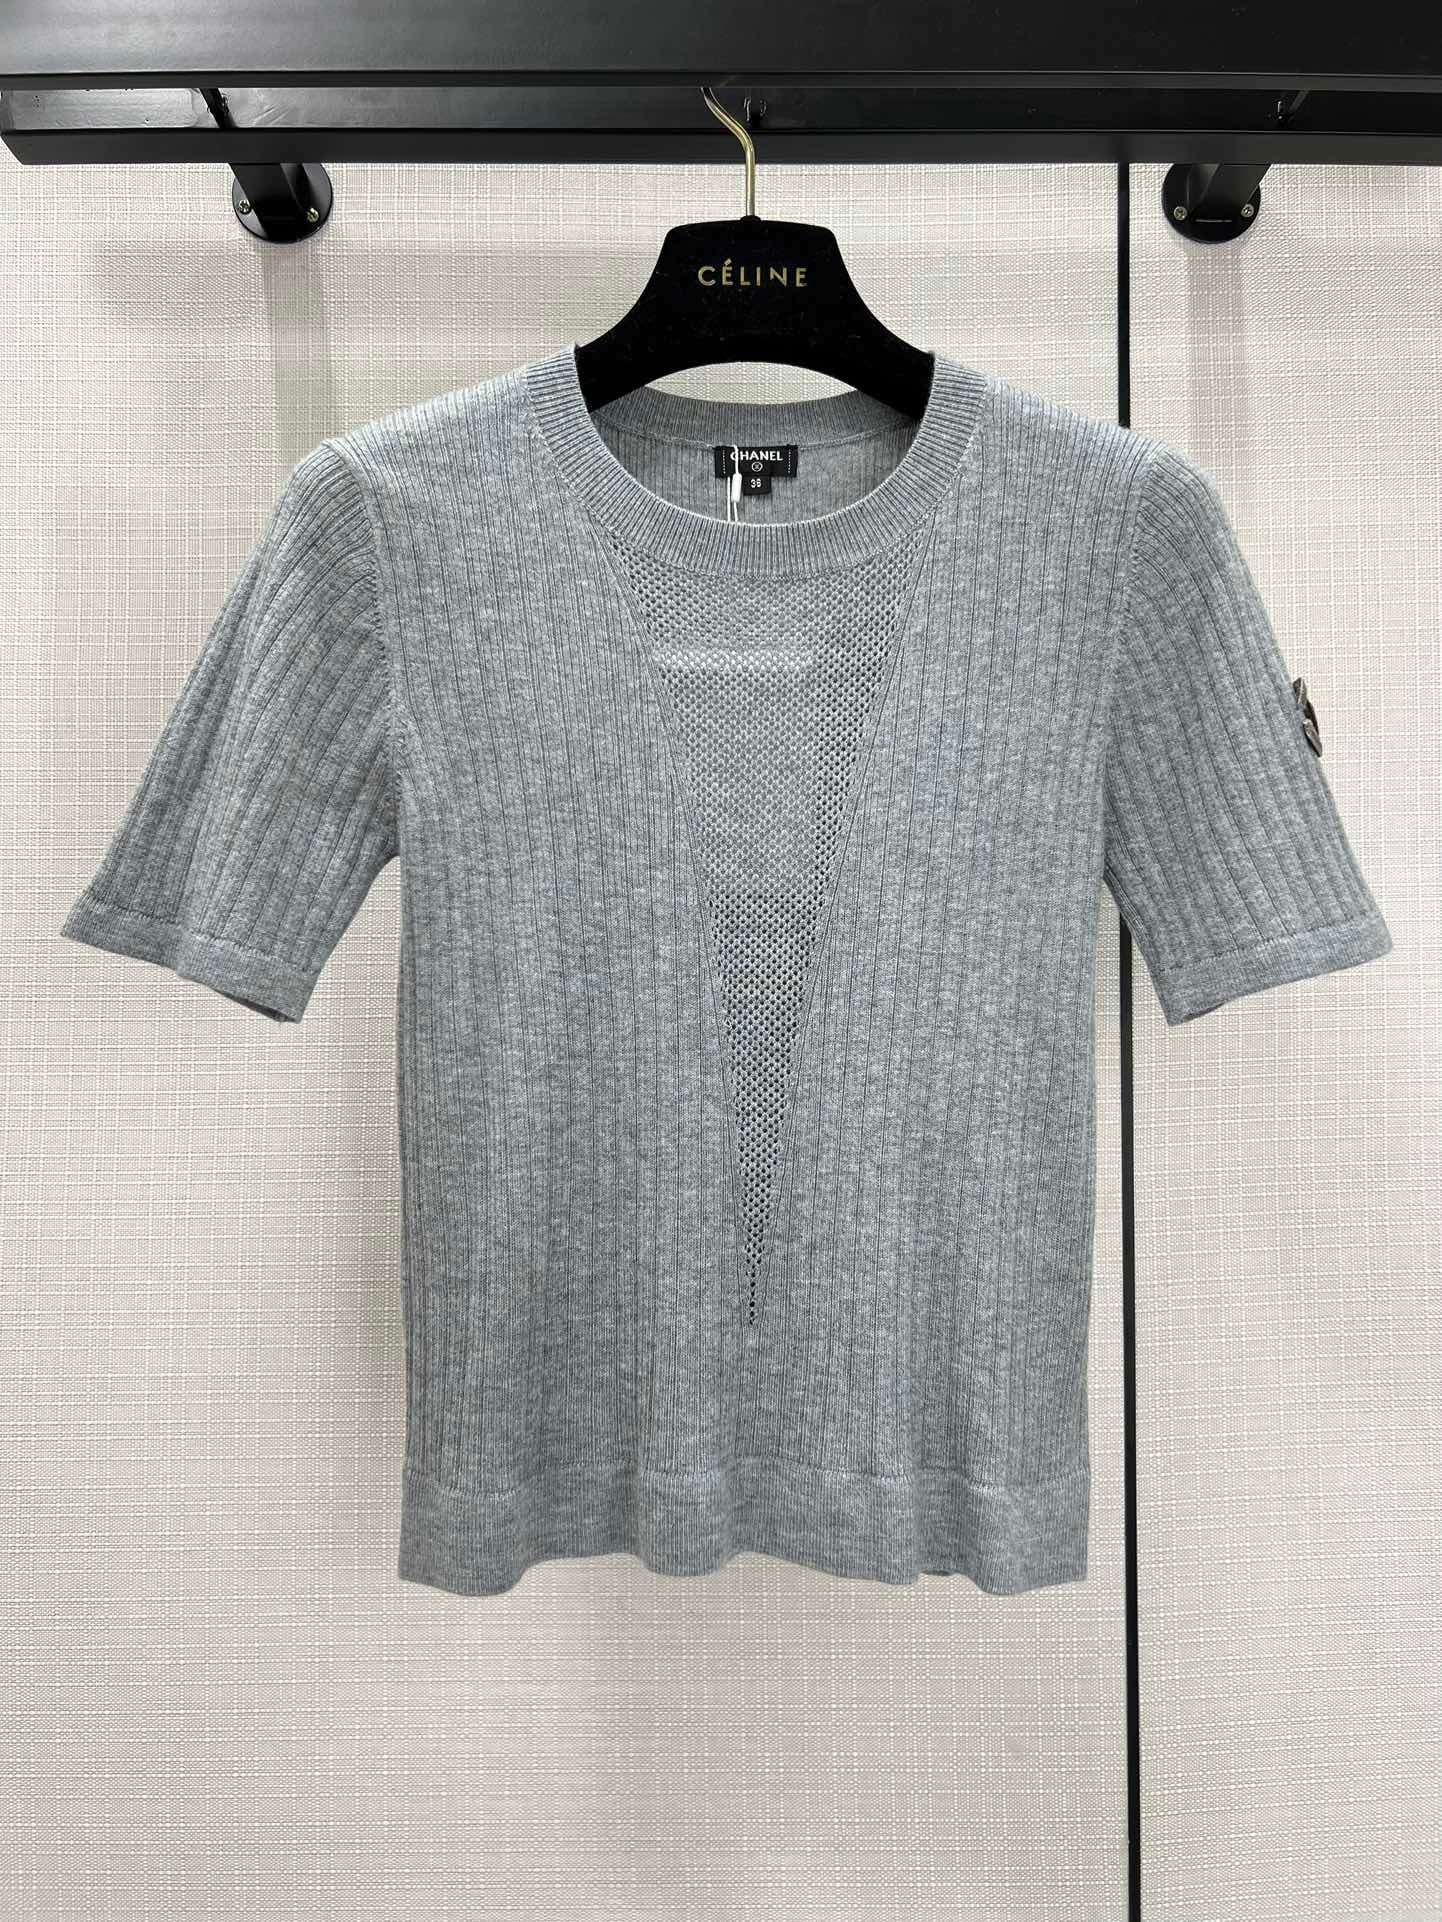 Chanel Clothing Shirts & Blouses White Openwork Knitting